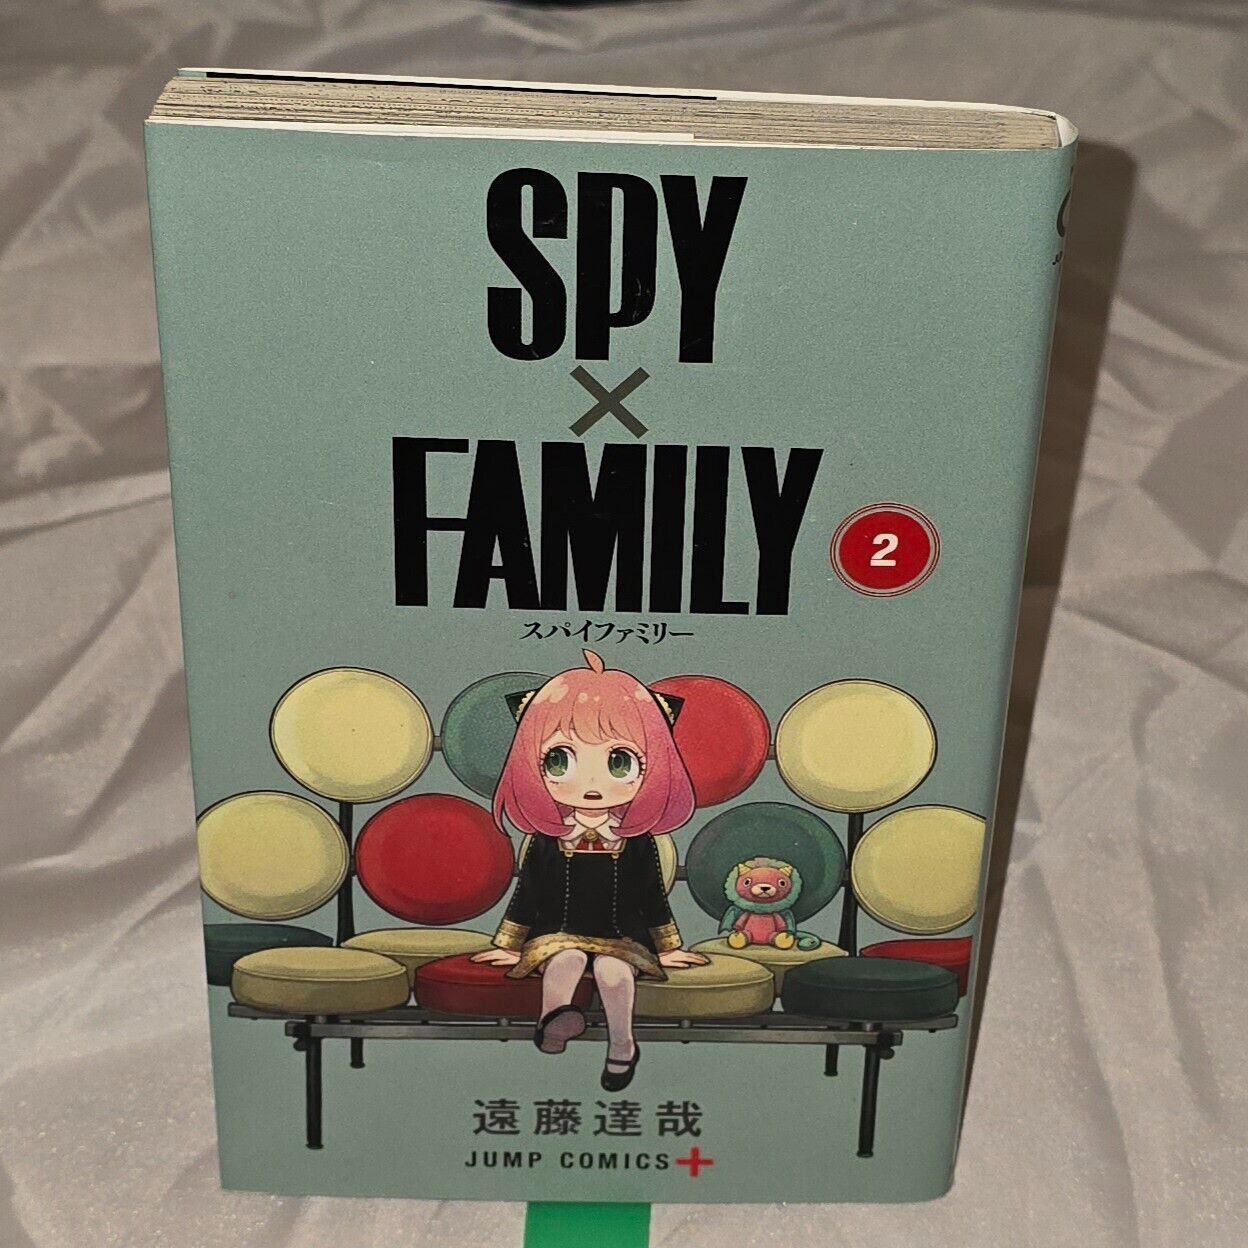 SPY×FAMILY vol.2 [Japanese Edition (Paperback)] JUMP comic by Tatsuya Endo